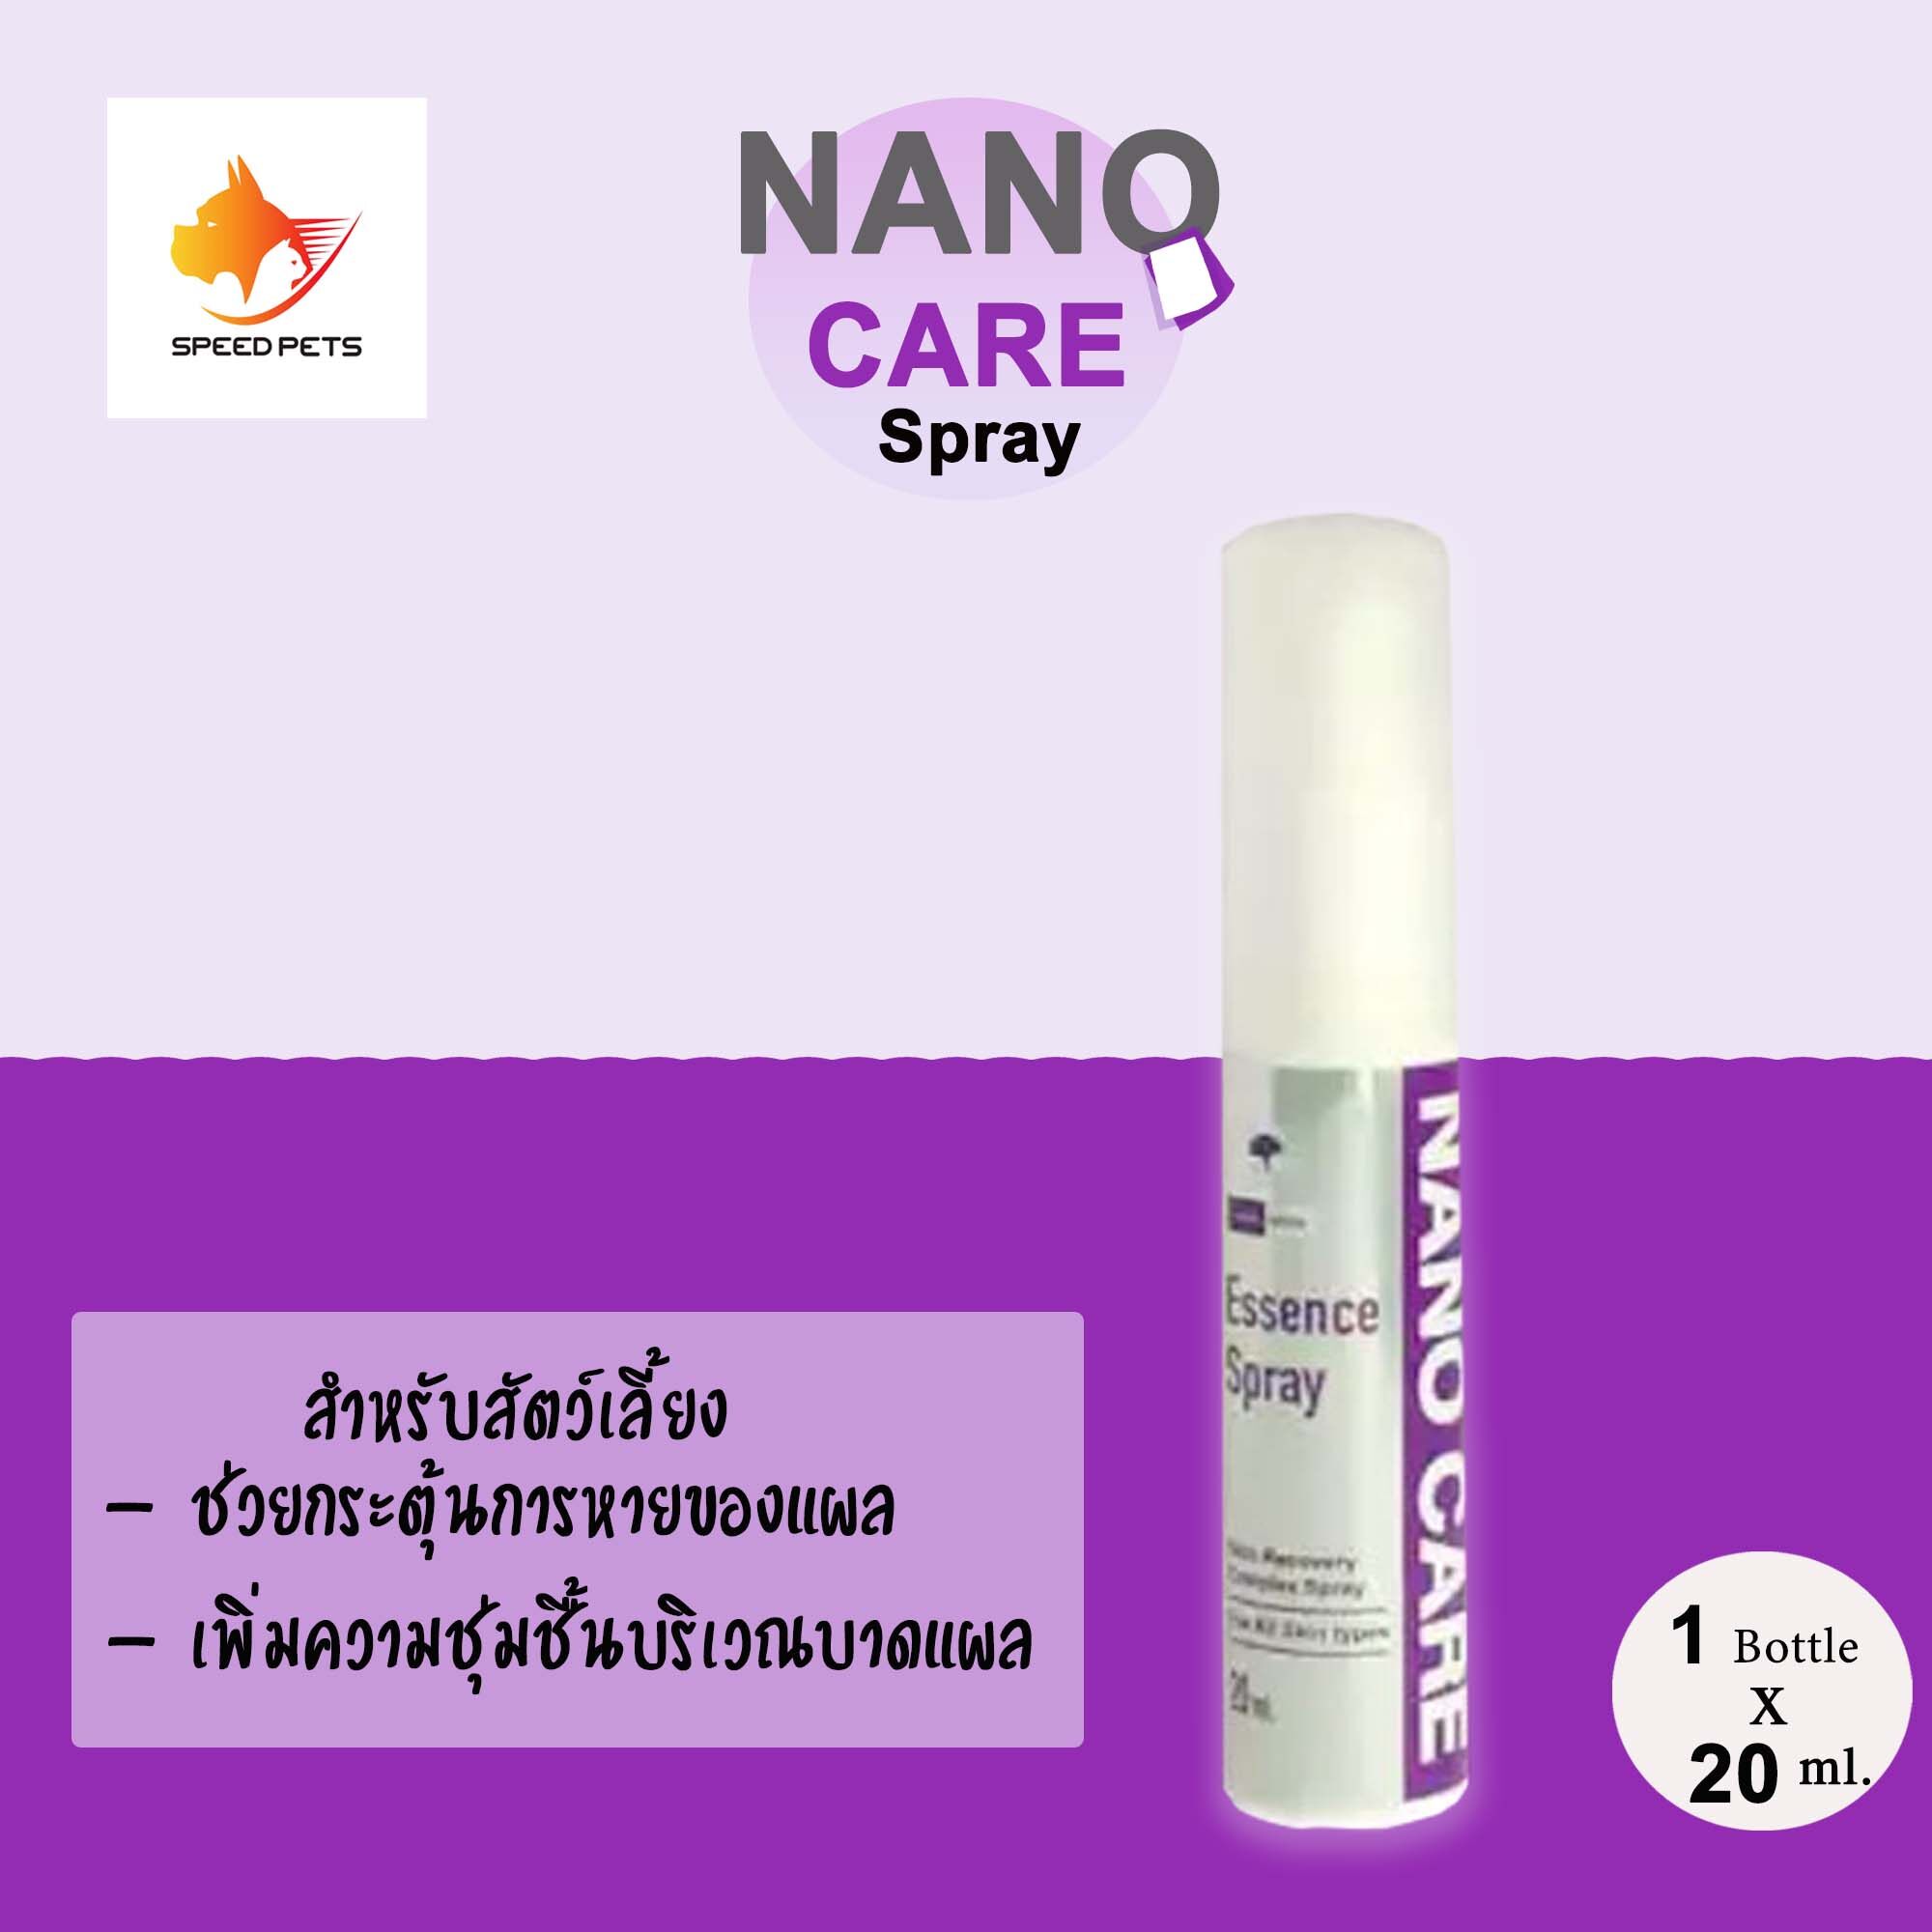 Nano Care Spray 20ml  สเปรย์ นาโน แบบพ่น พ่นแผล สัตว์เลี้ยง ขนาด 20 ml